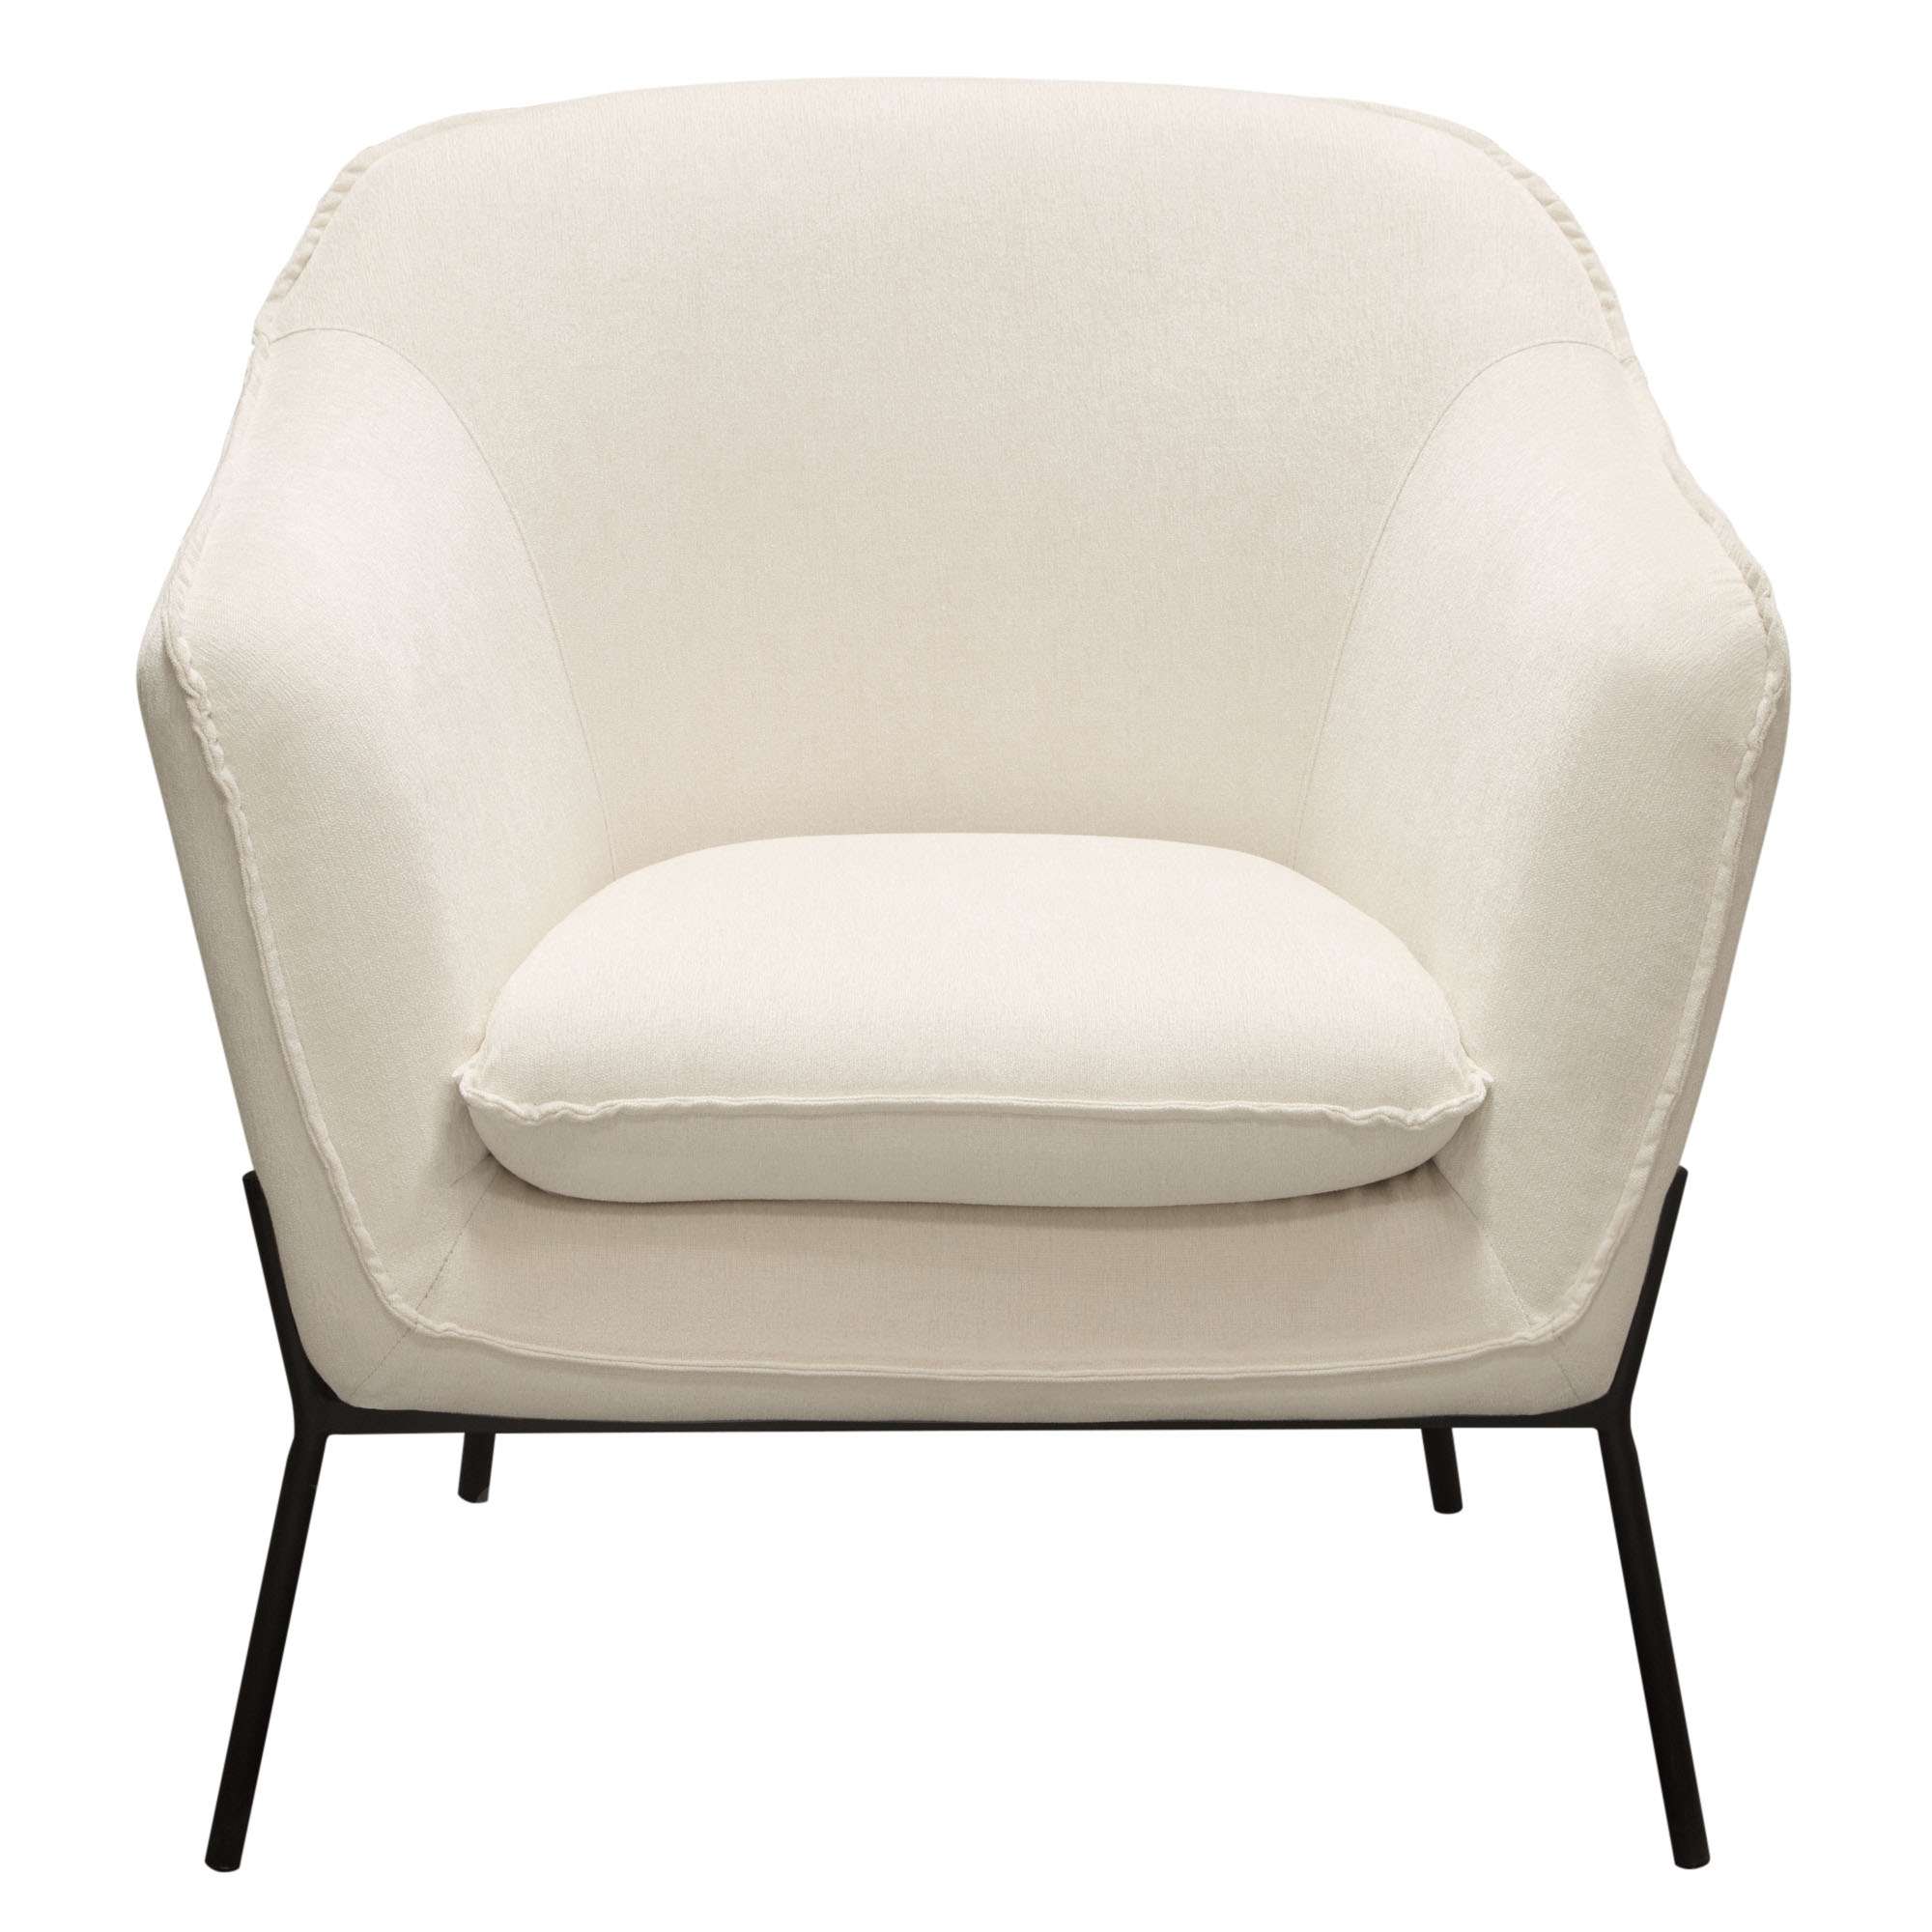 Status Accent Chair in Cream Fabric by Diamond Sofa - Decorian Group